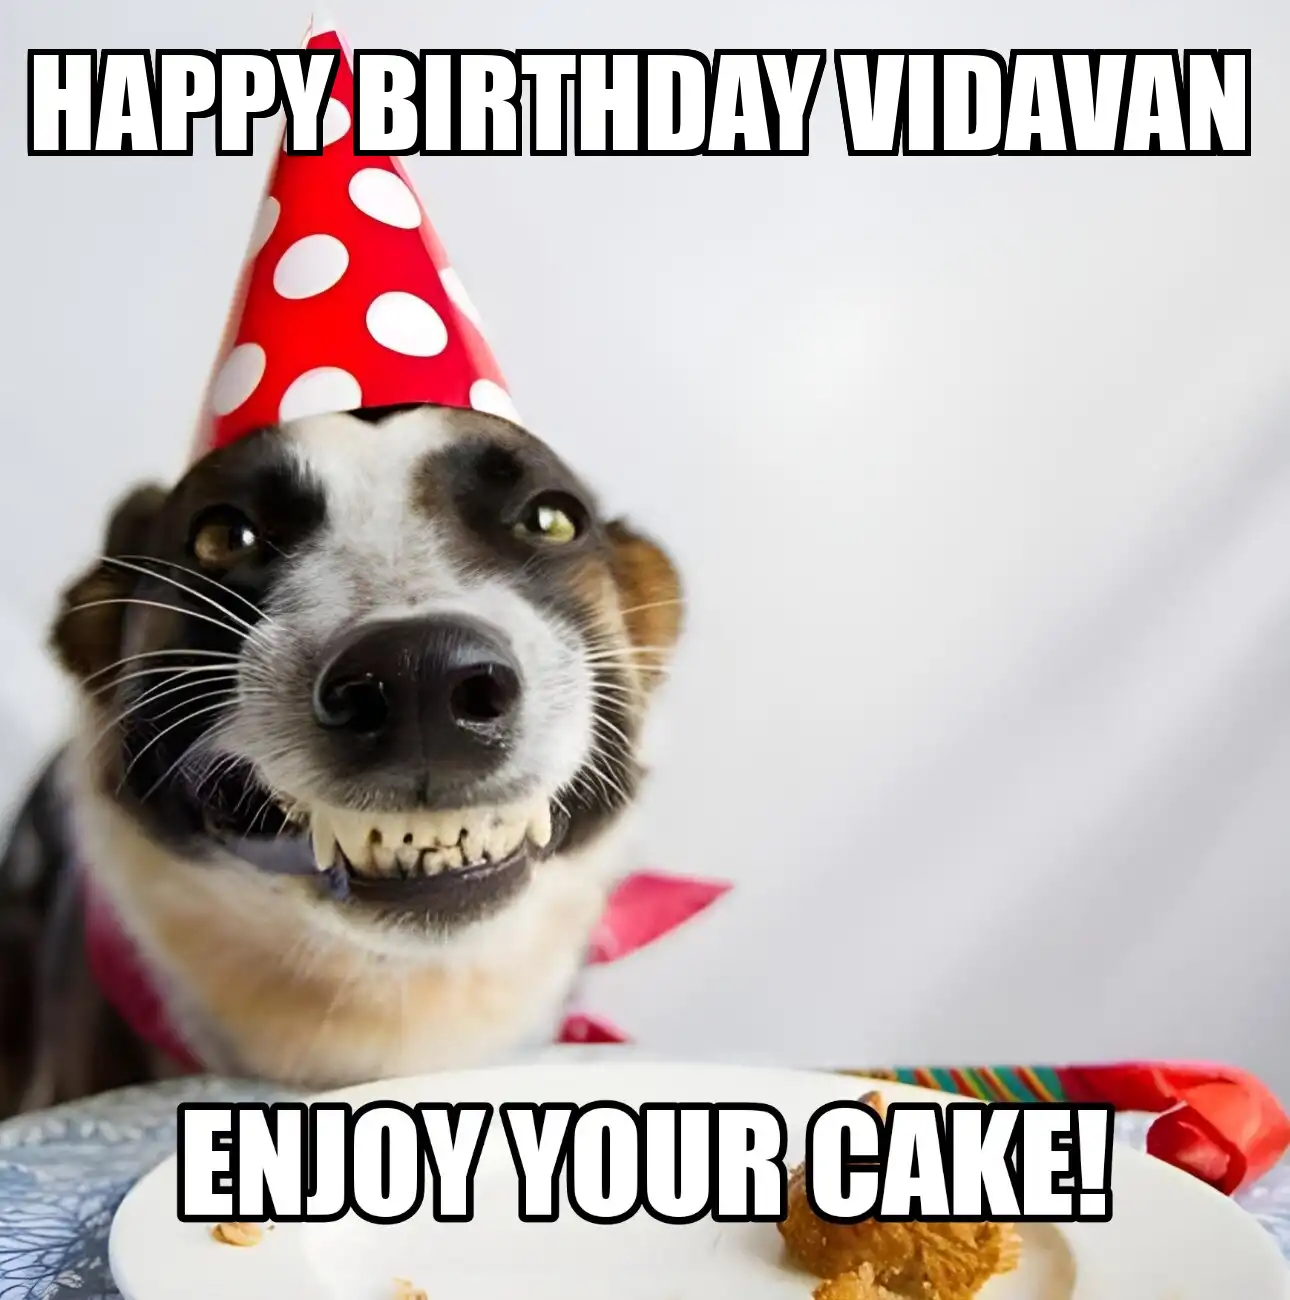 Happy Birthday Vidavan Enjoy Your Cake Dog Meme